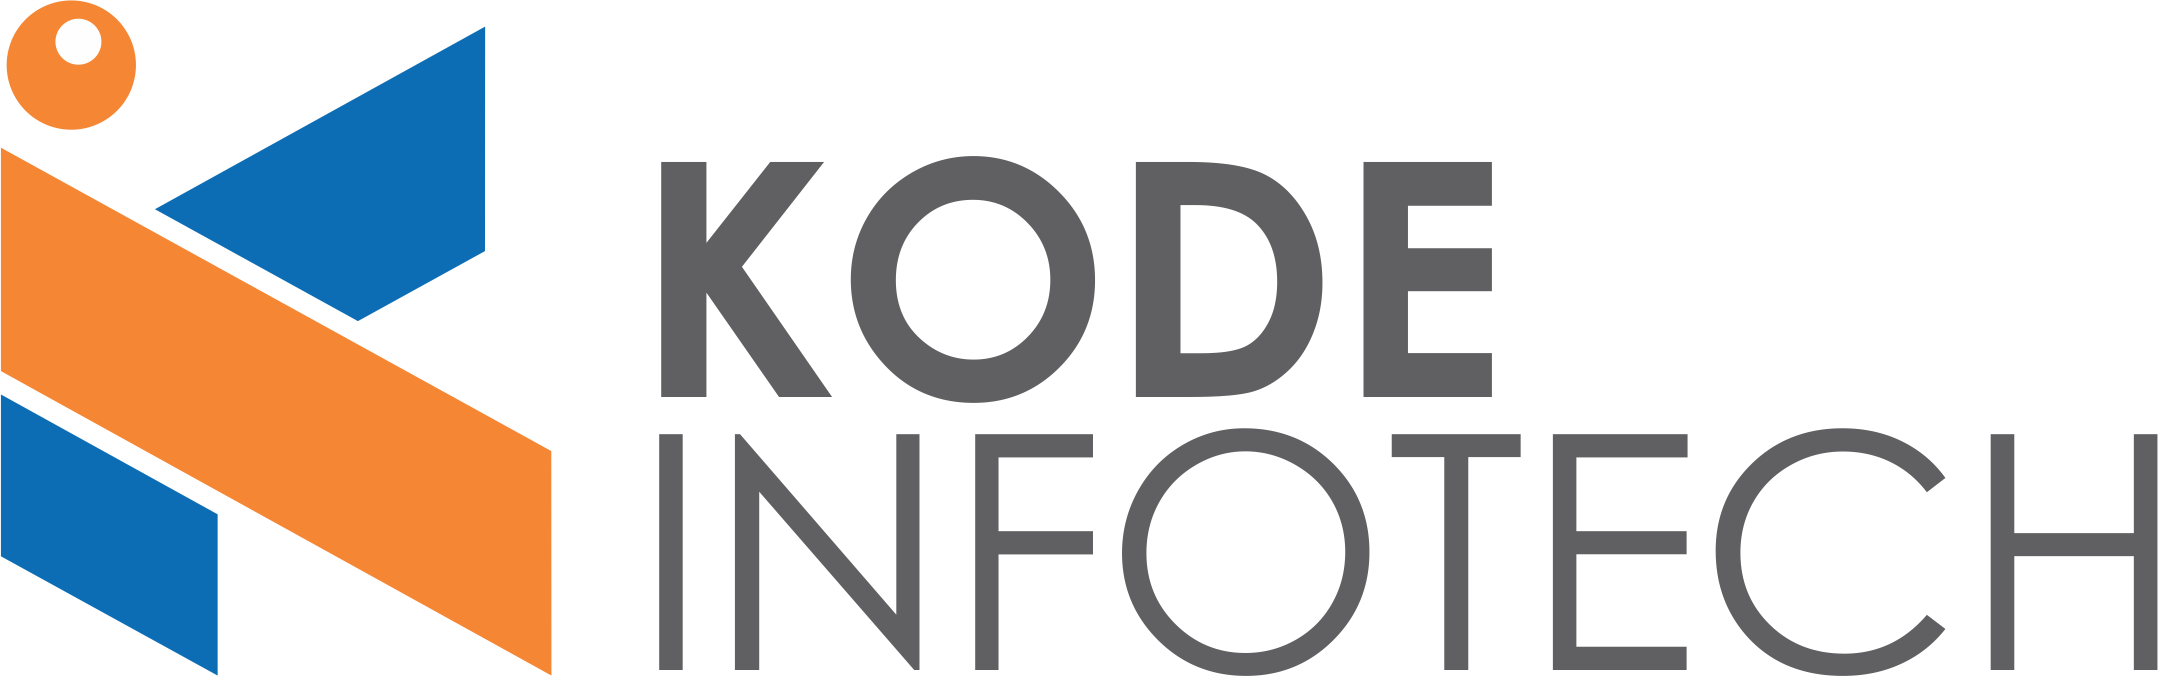 Kode Infotech Logo png